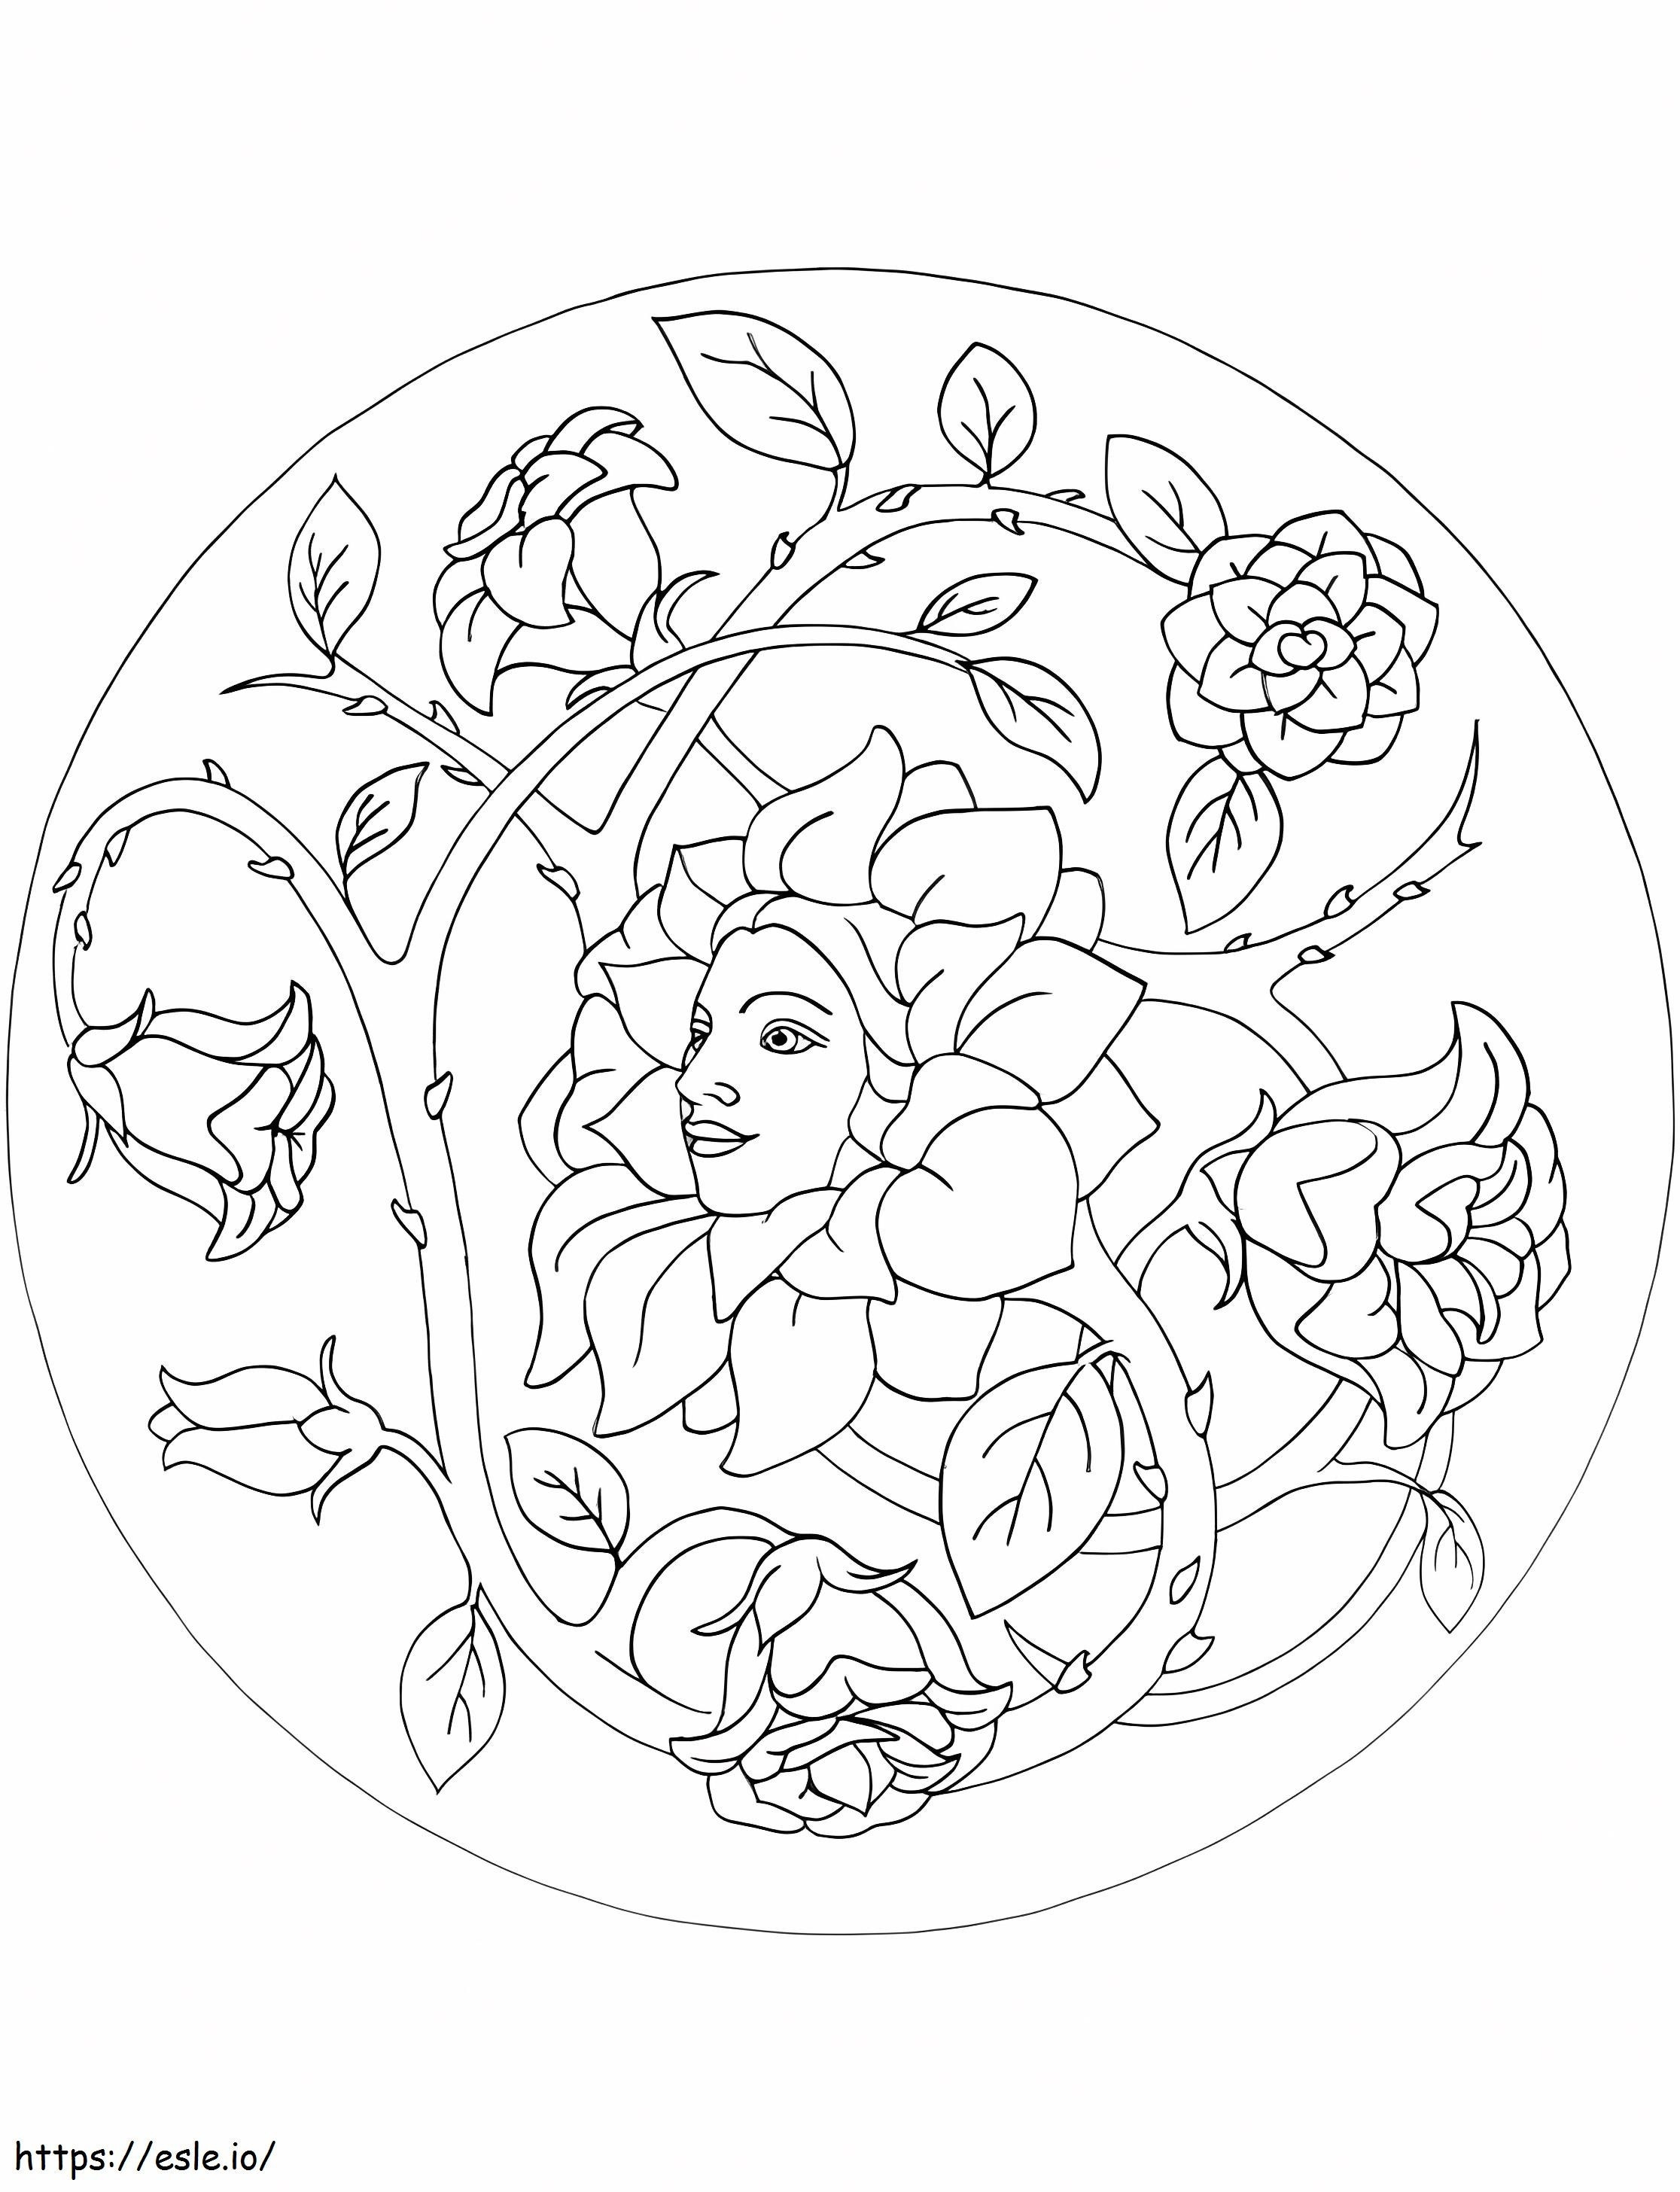 Kostenloses druckbares Blumen-Mandala ausmalbilder